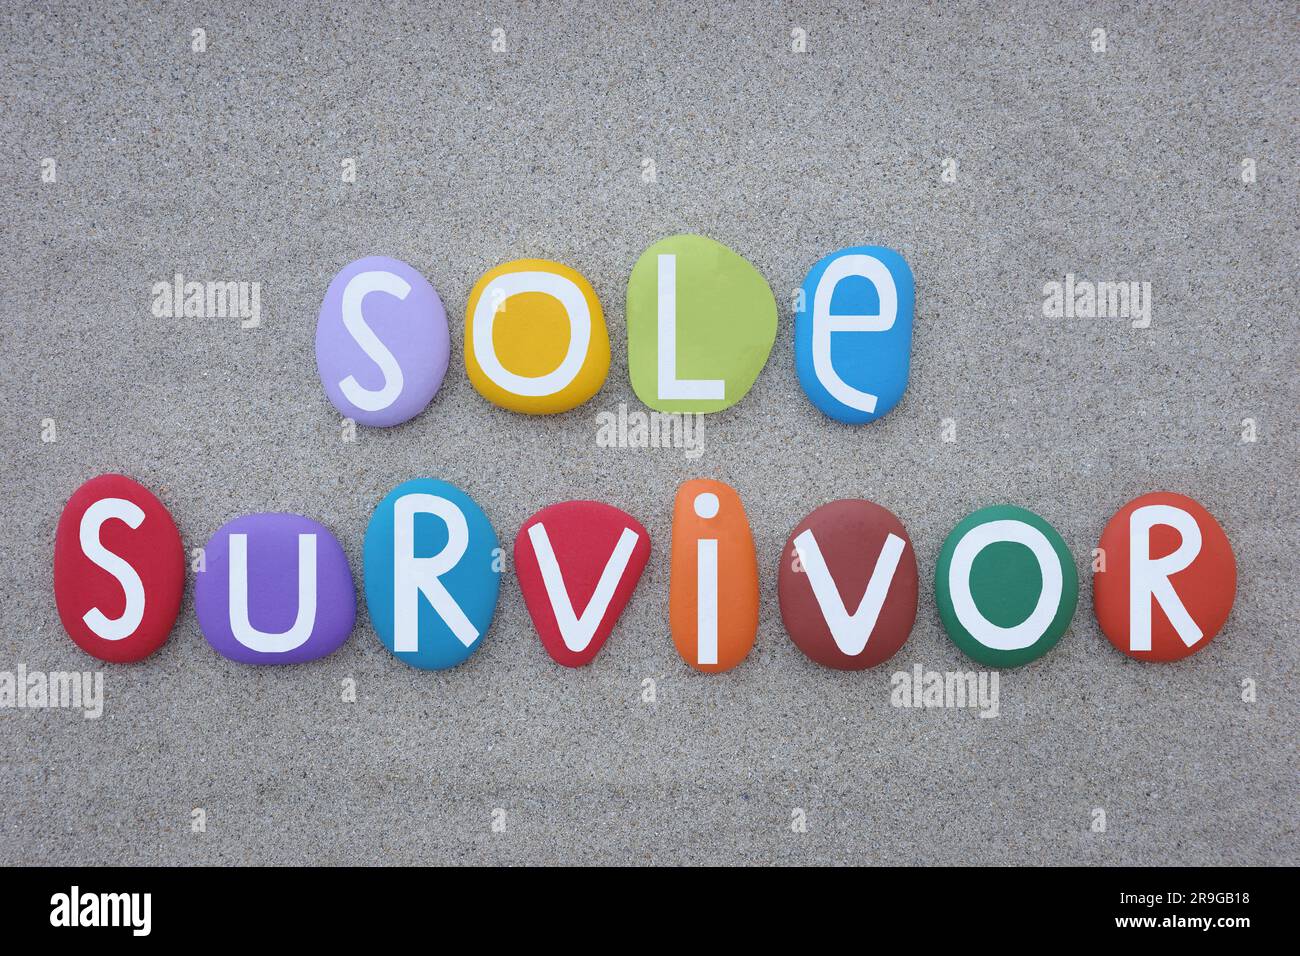 Sole survivor, creative slogan composed with multi colored stone letters over beach sand Stock Photo